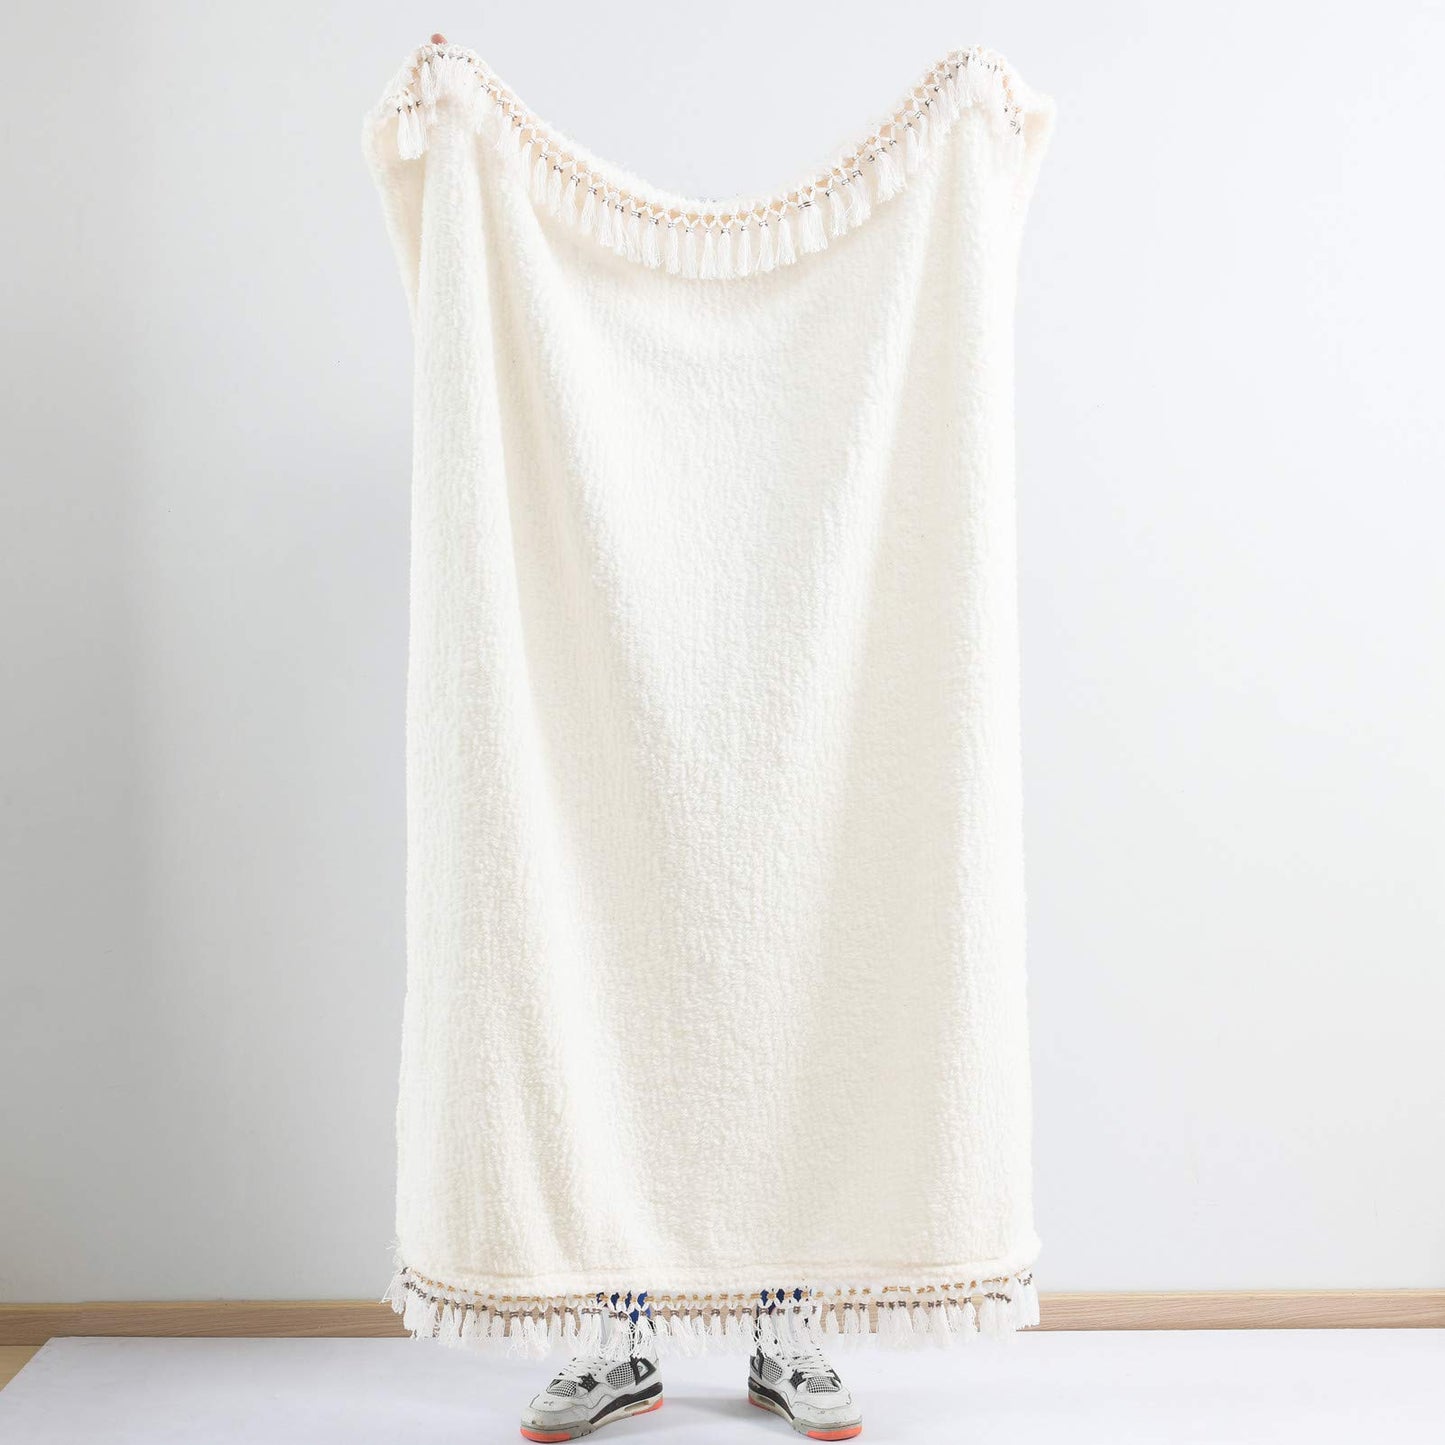 Tassled Antique White Ultra Soft Cozy Sherpa Throw Blanket